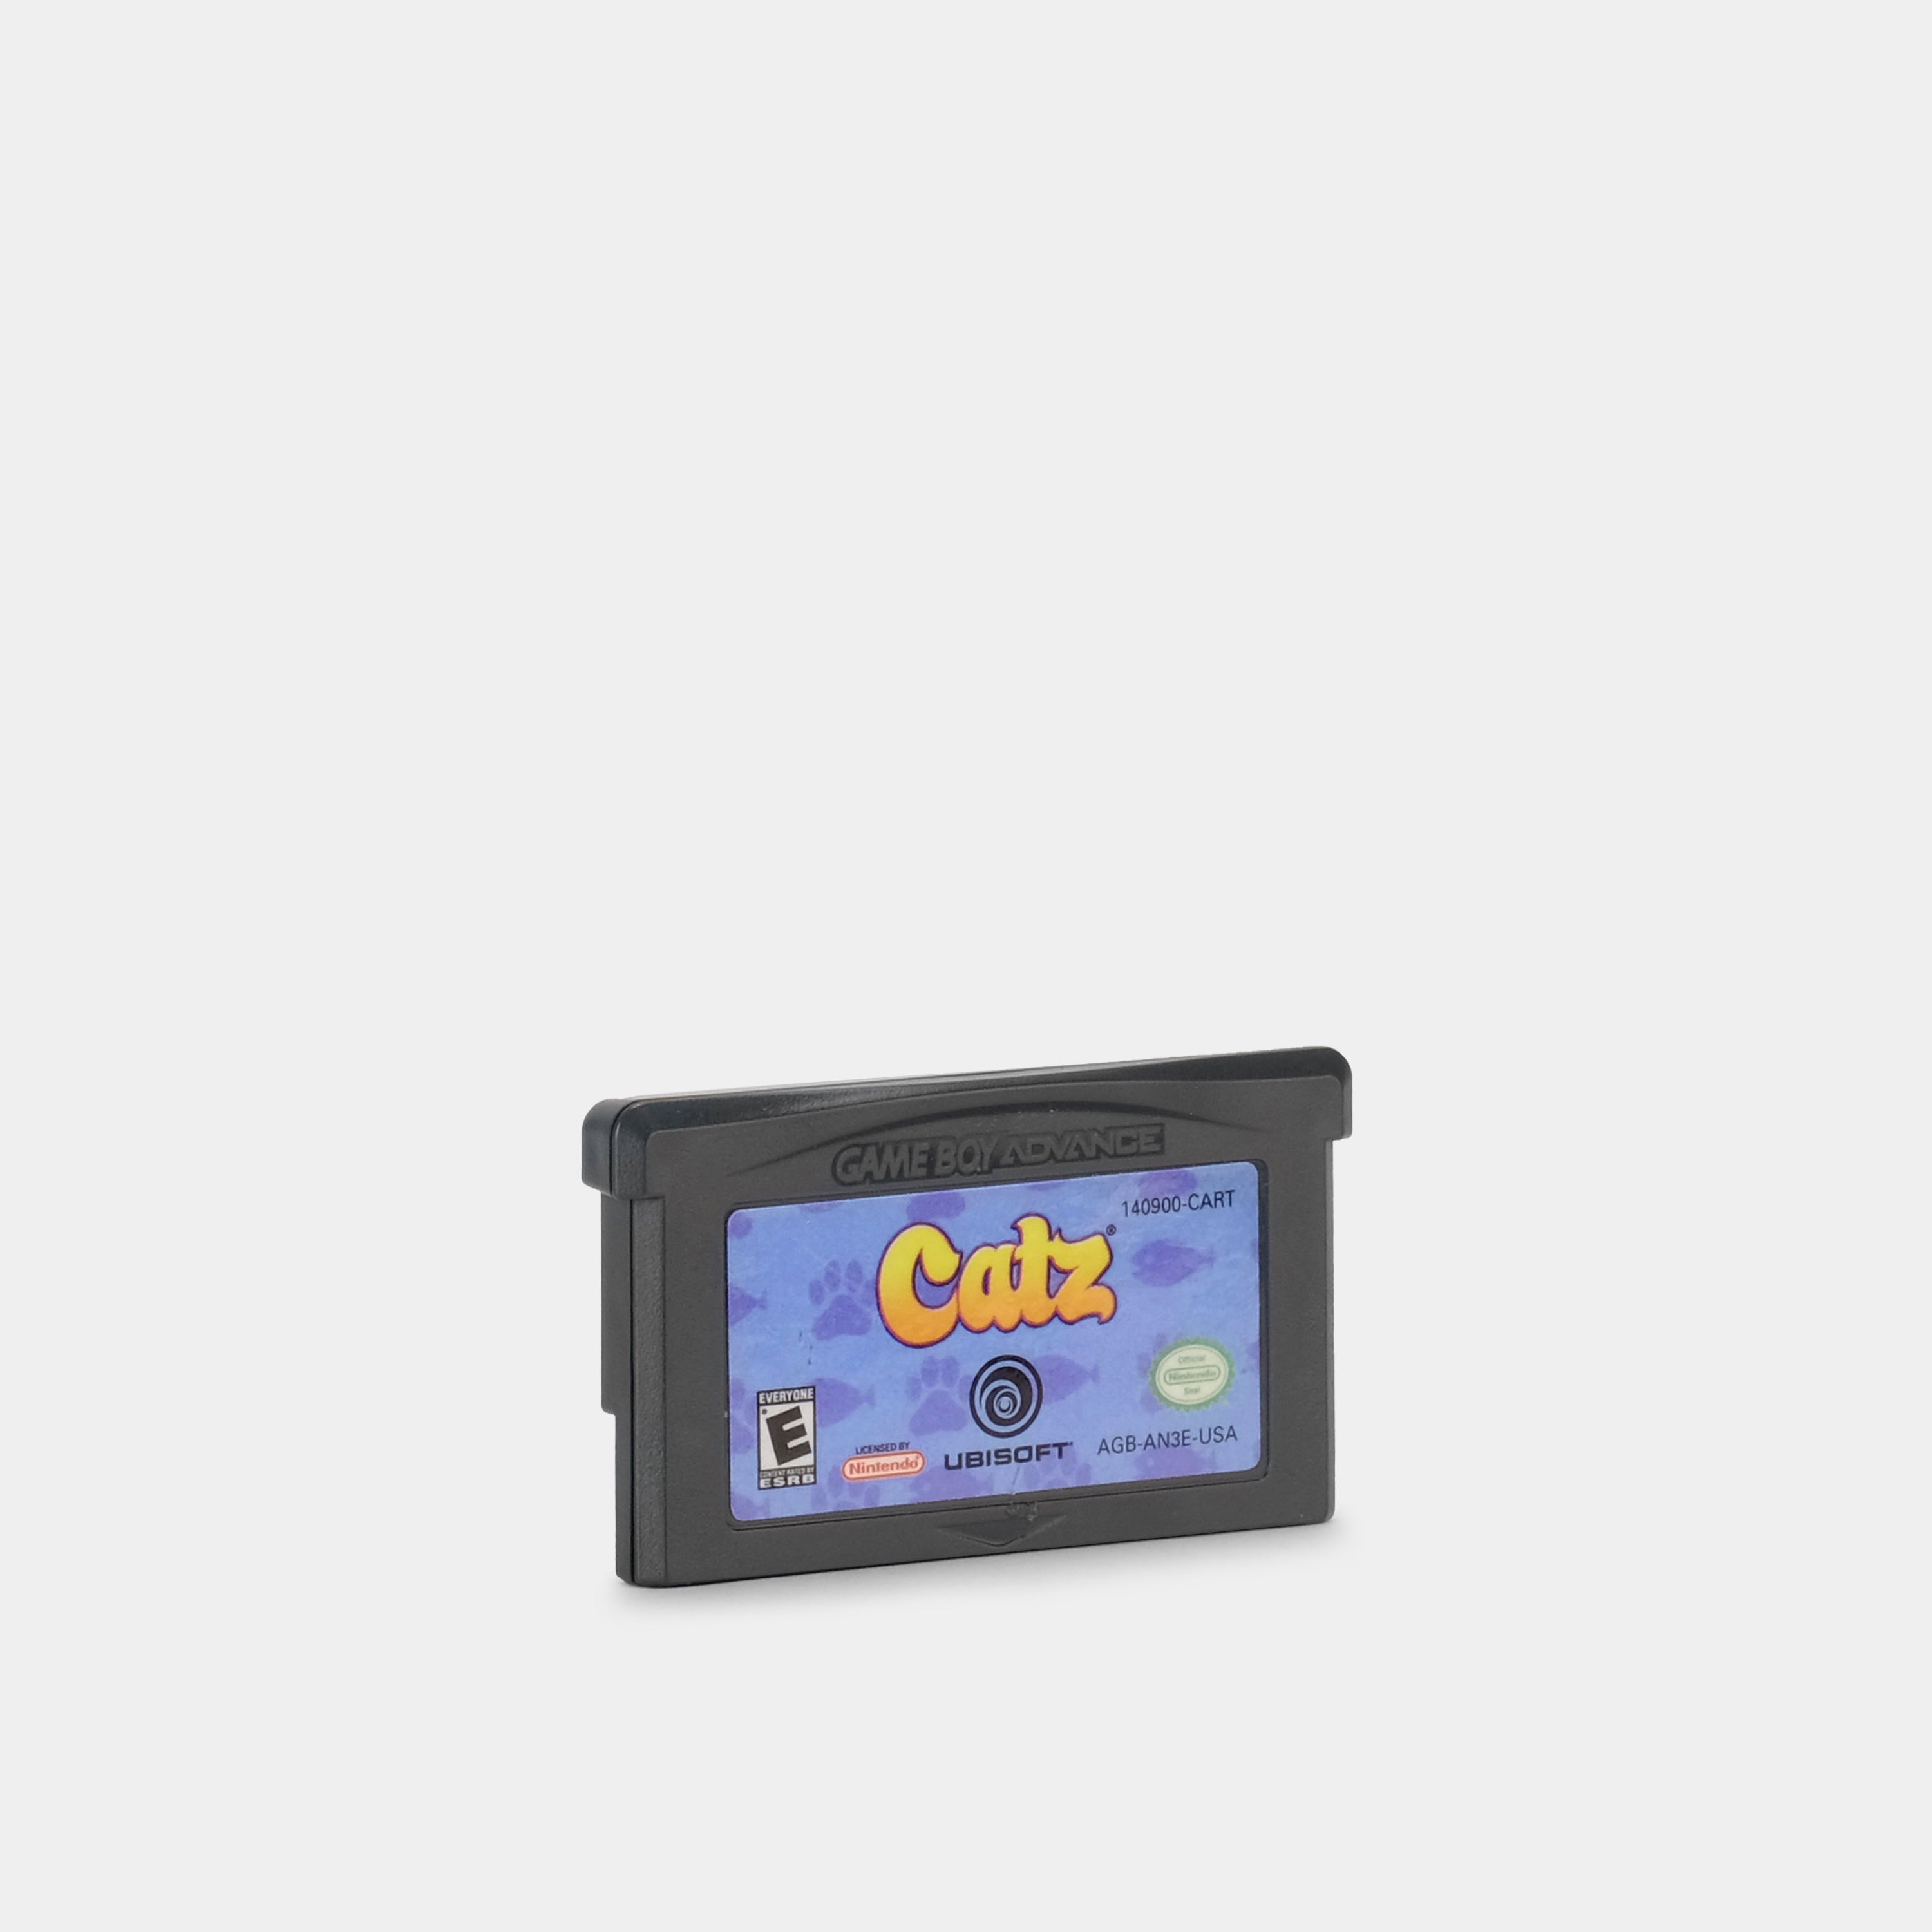 Catz Game Boy Advance Game